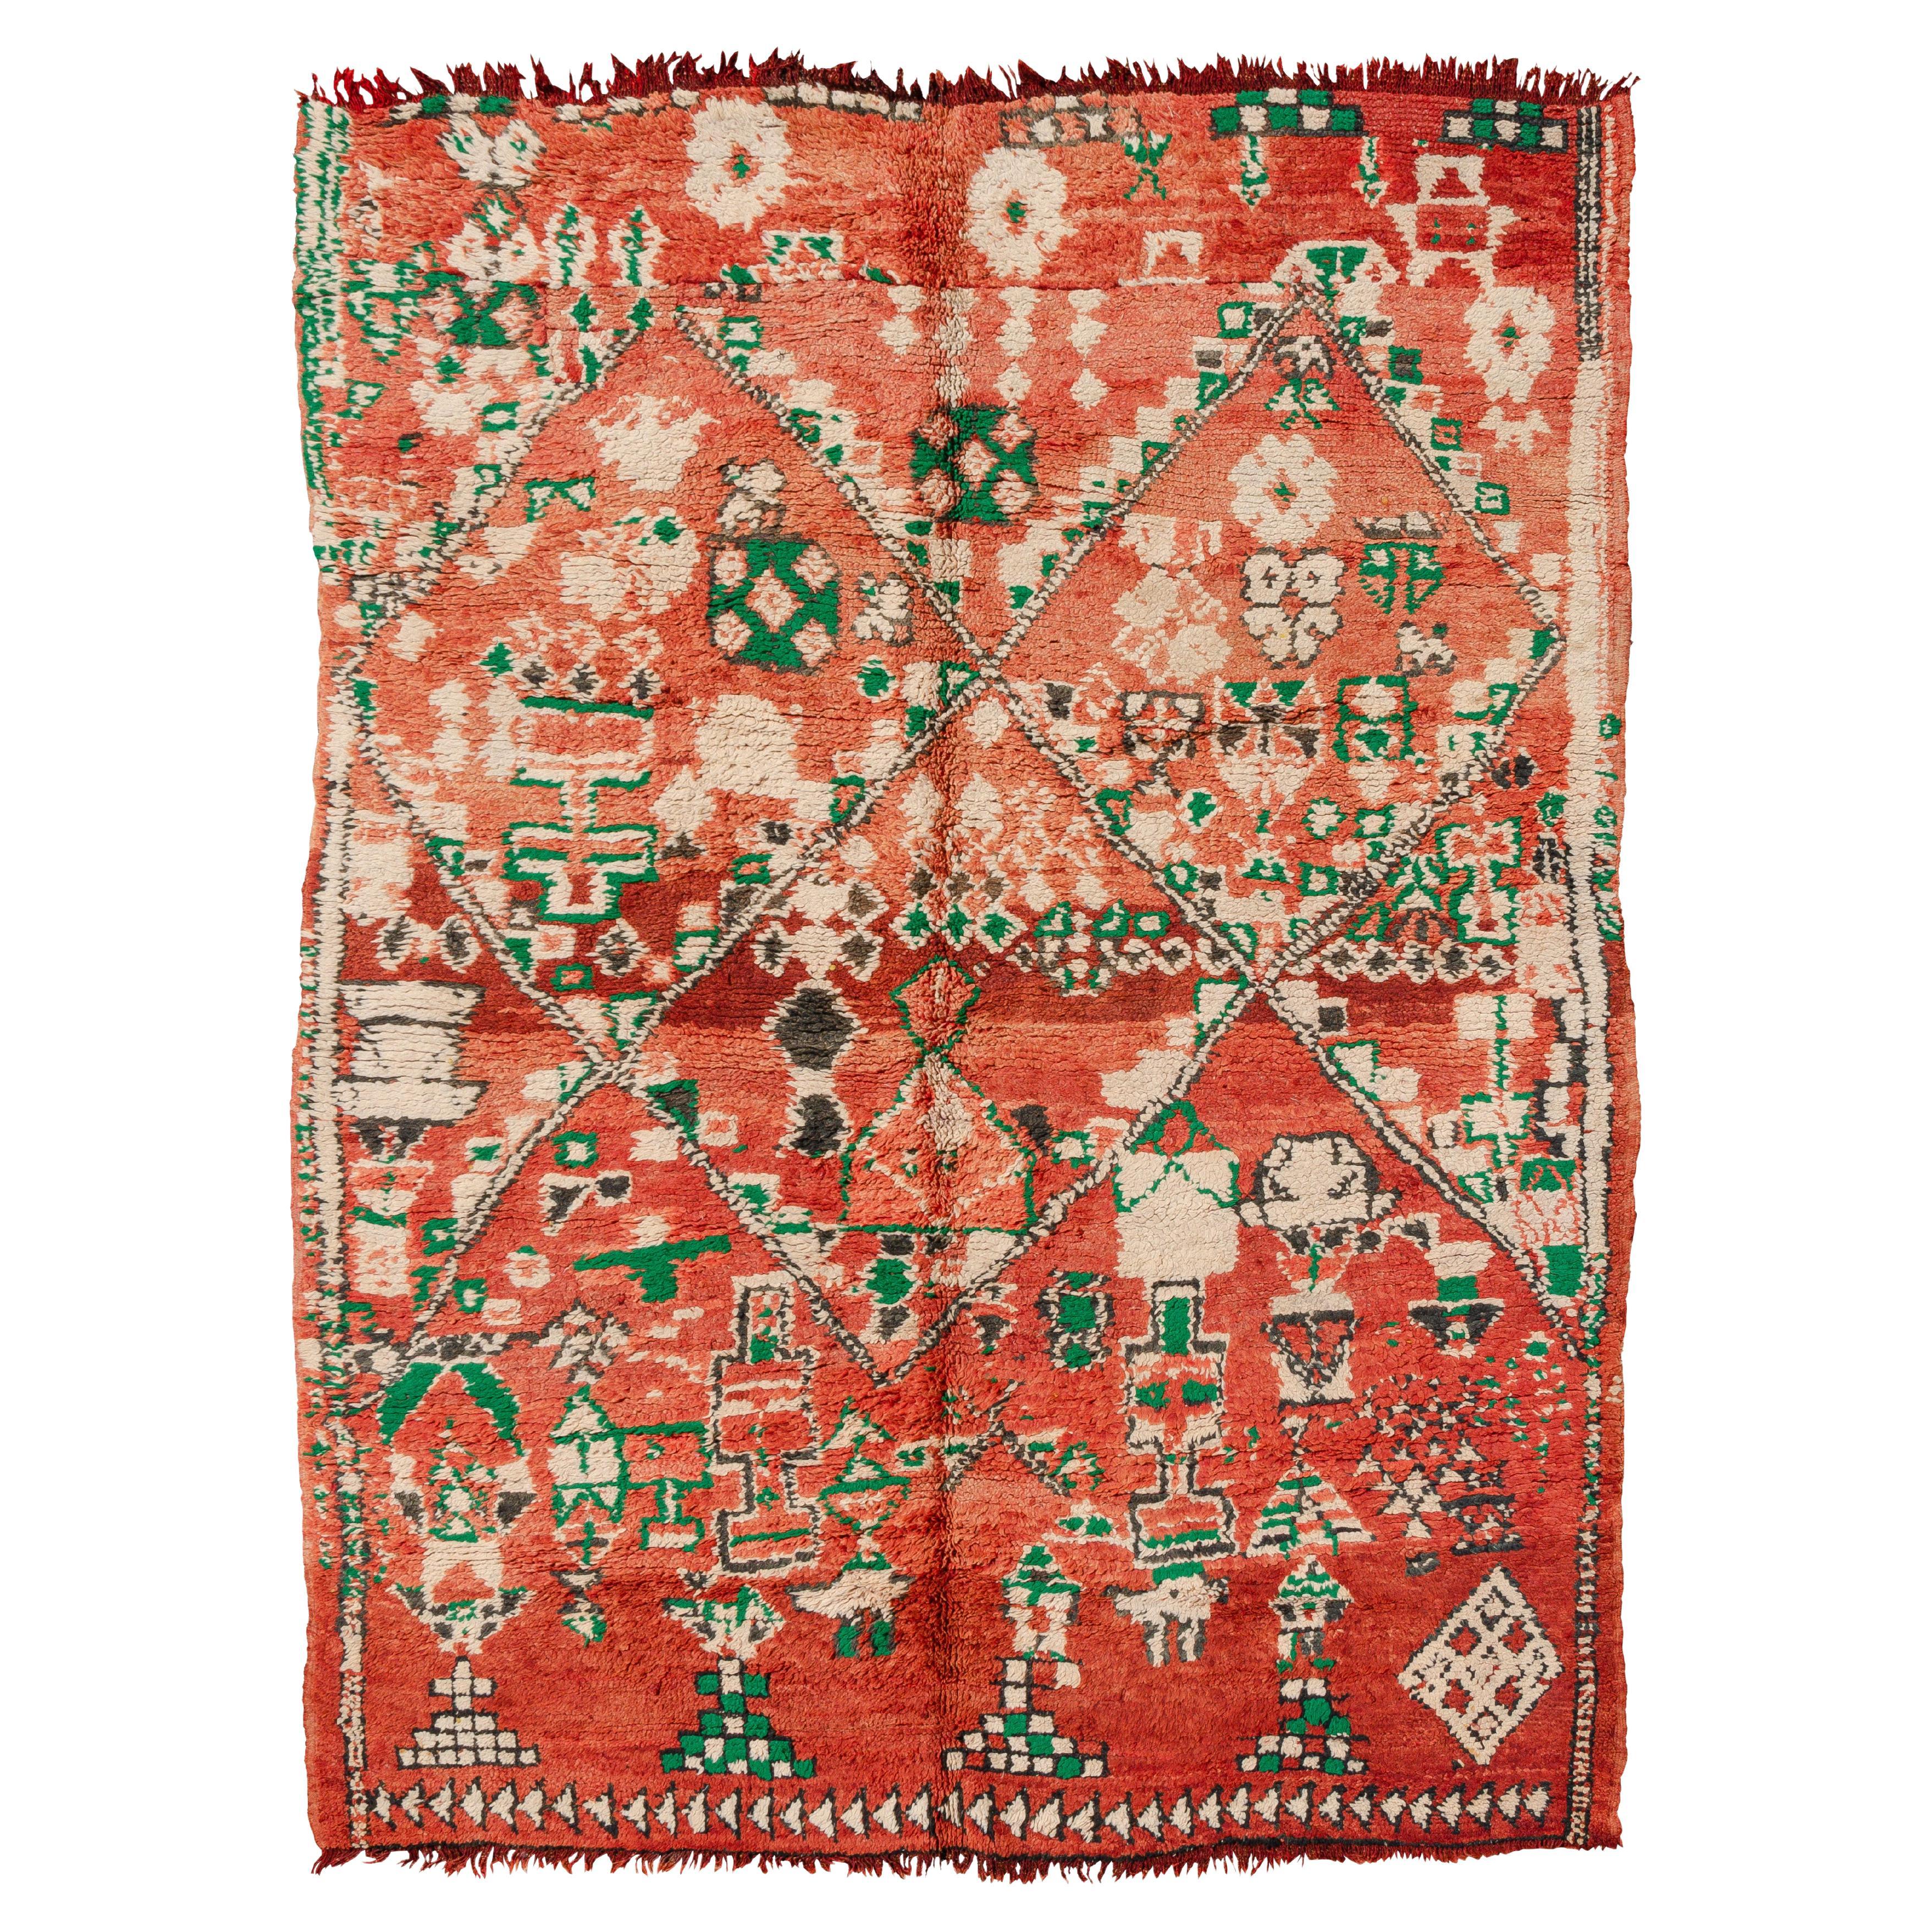  Ornate red vintage Moroccan Aït Sgougou rug curated by Breuckelen Berber